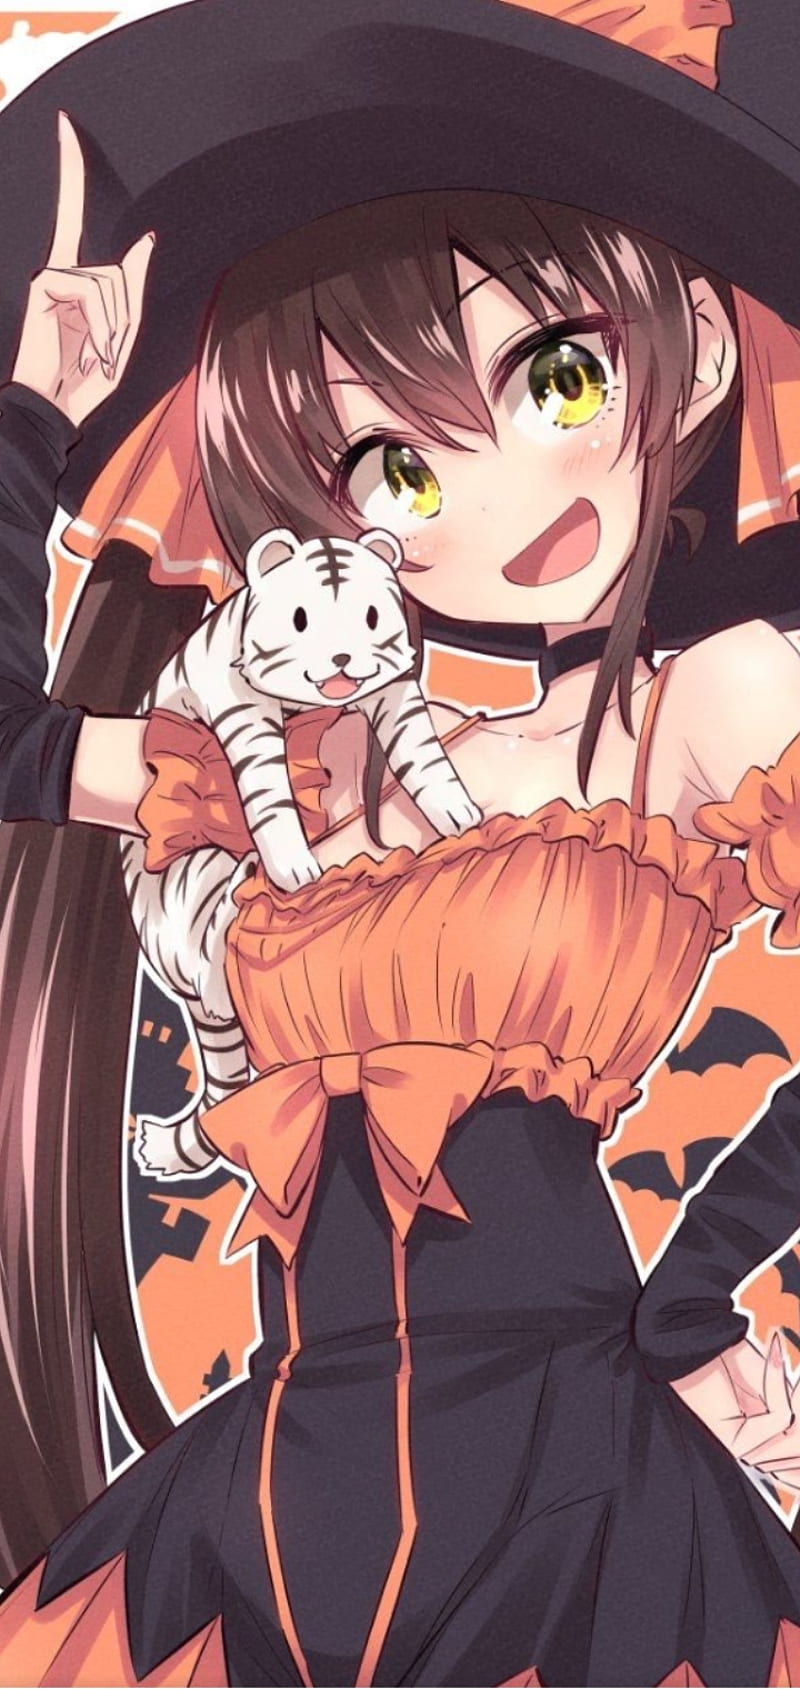 Happy Halloween Anime GIFs | Tenor